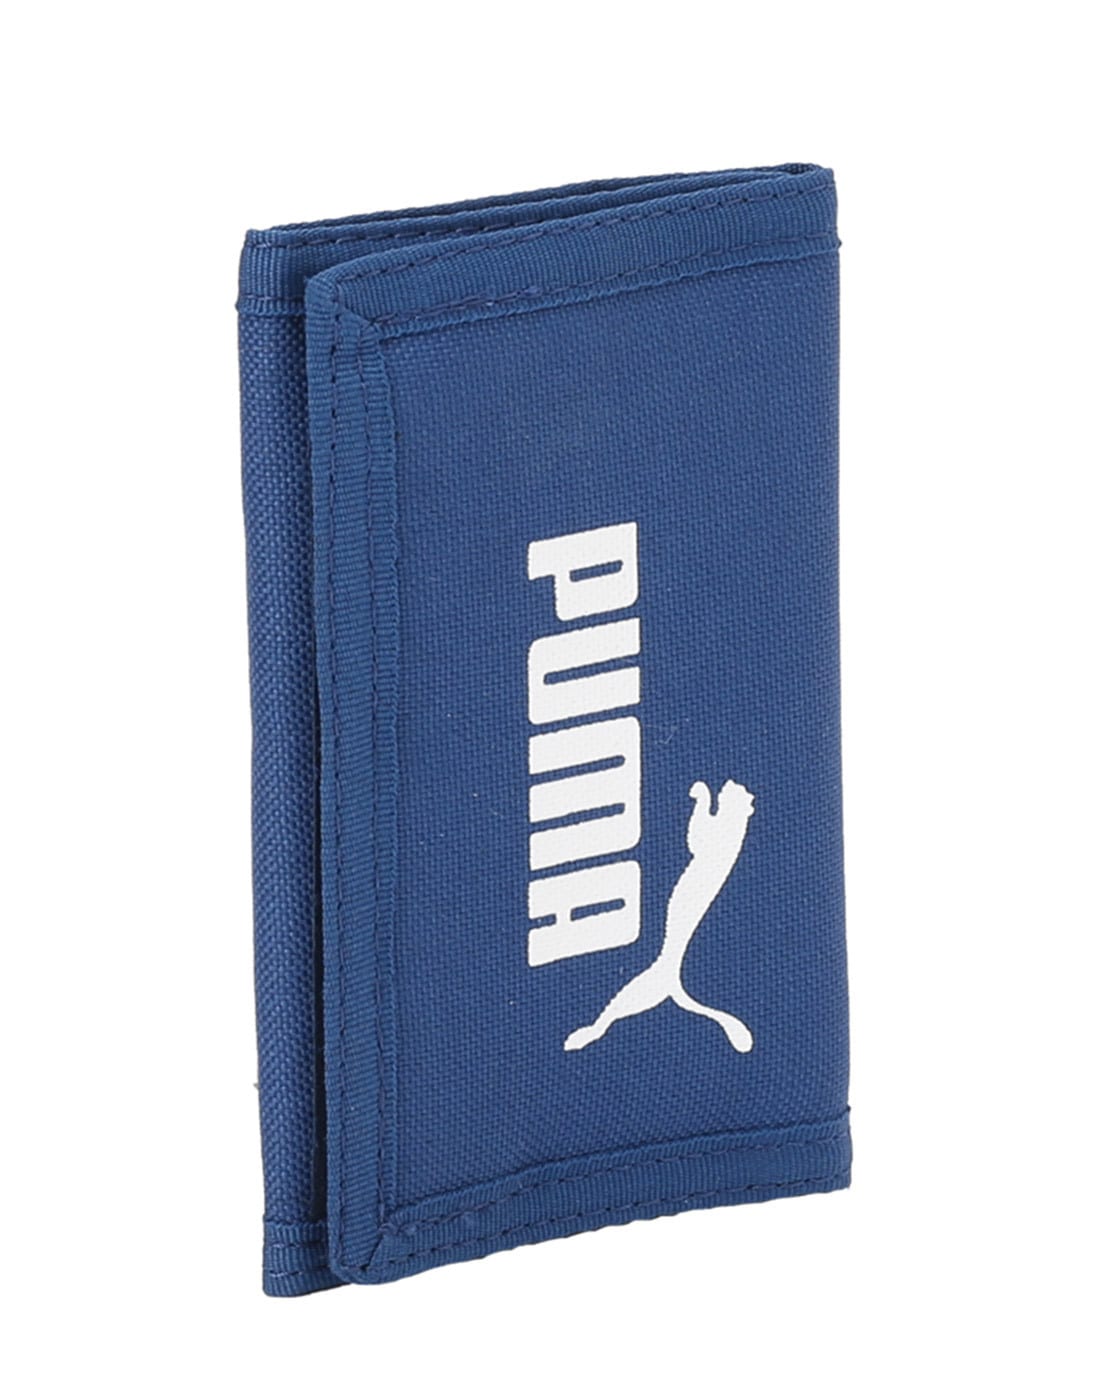 puma blue wallet